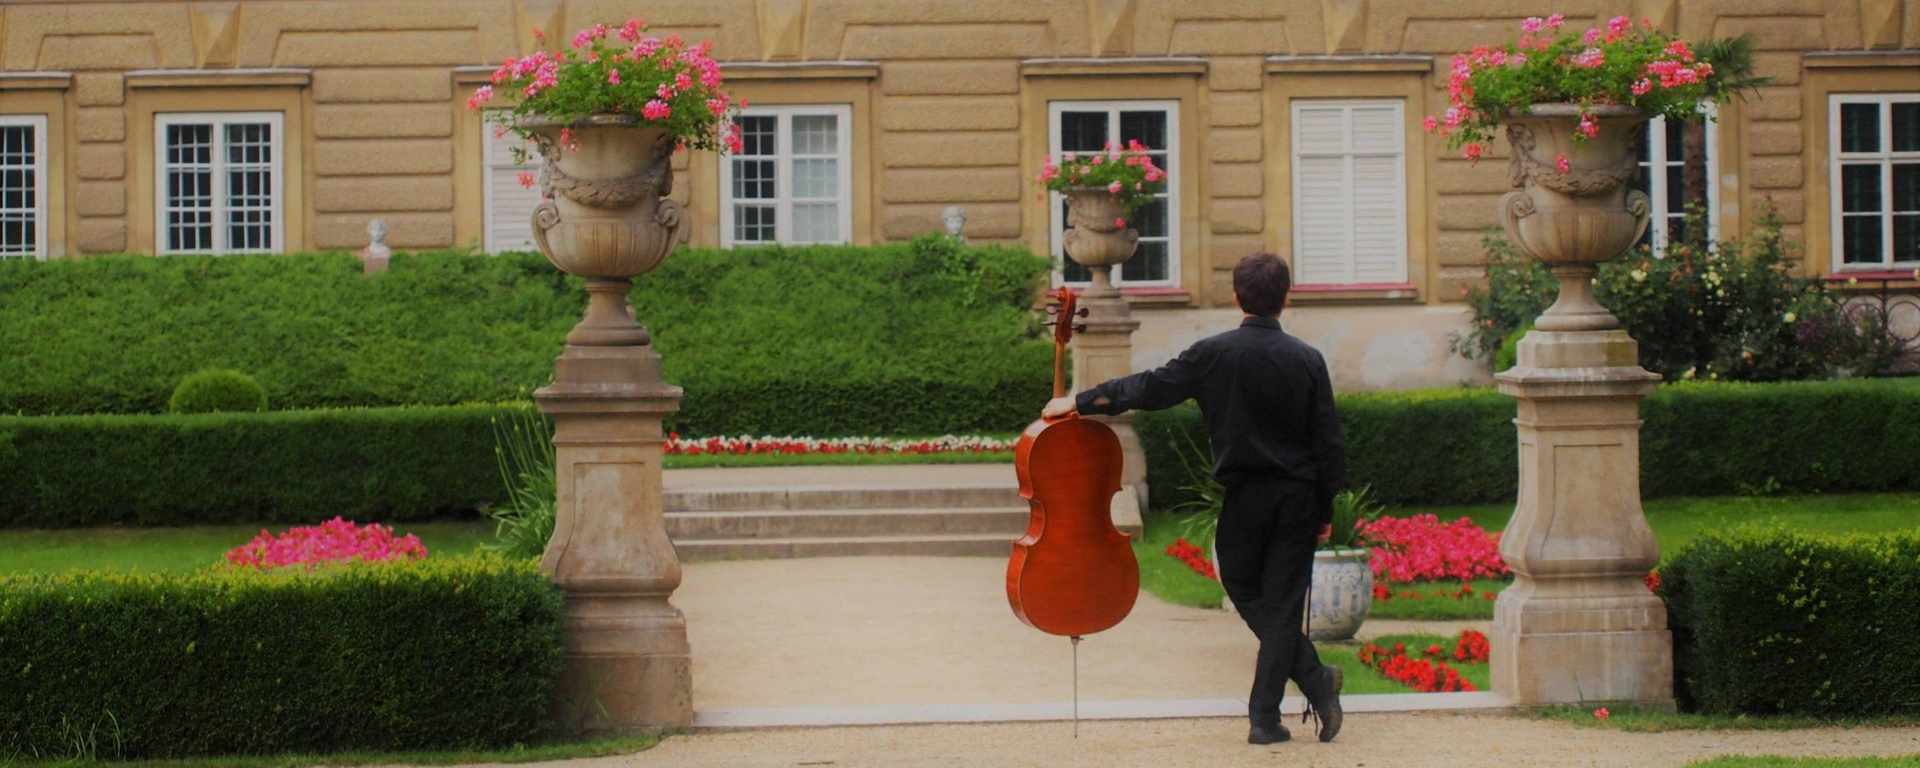 Cellounterricht für Fortgeschrittene